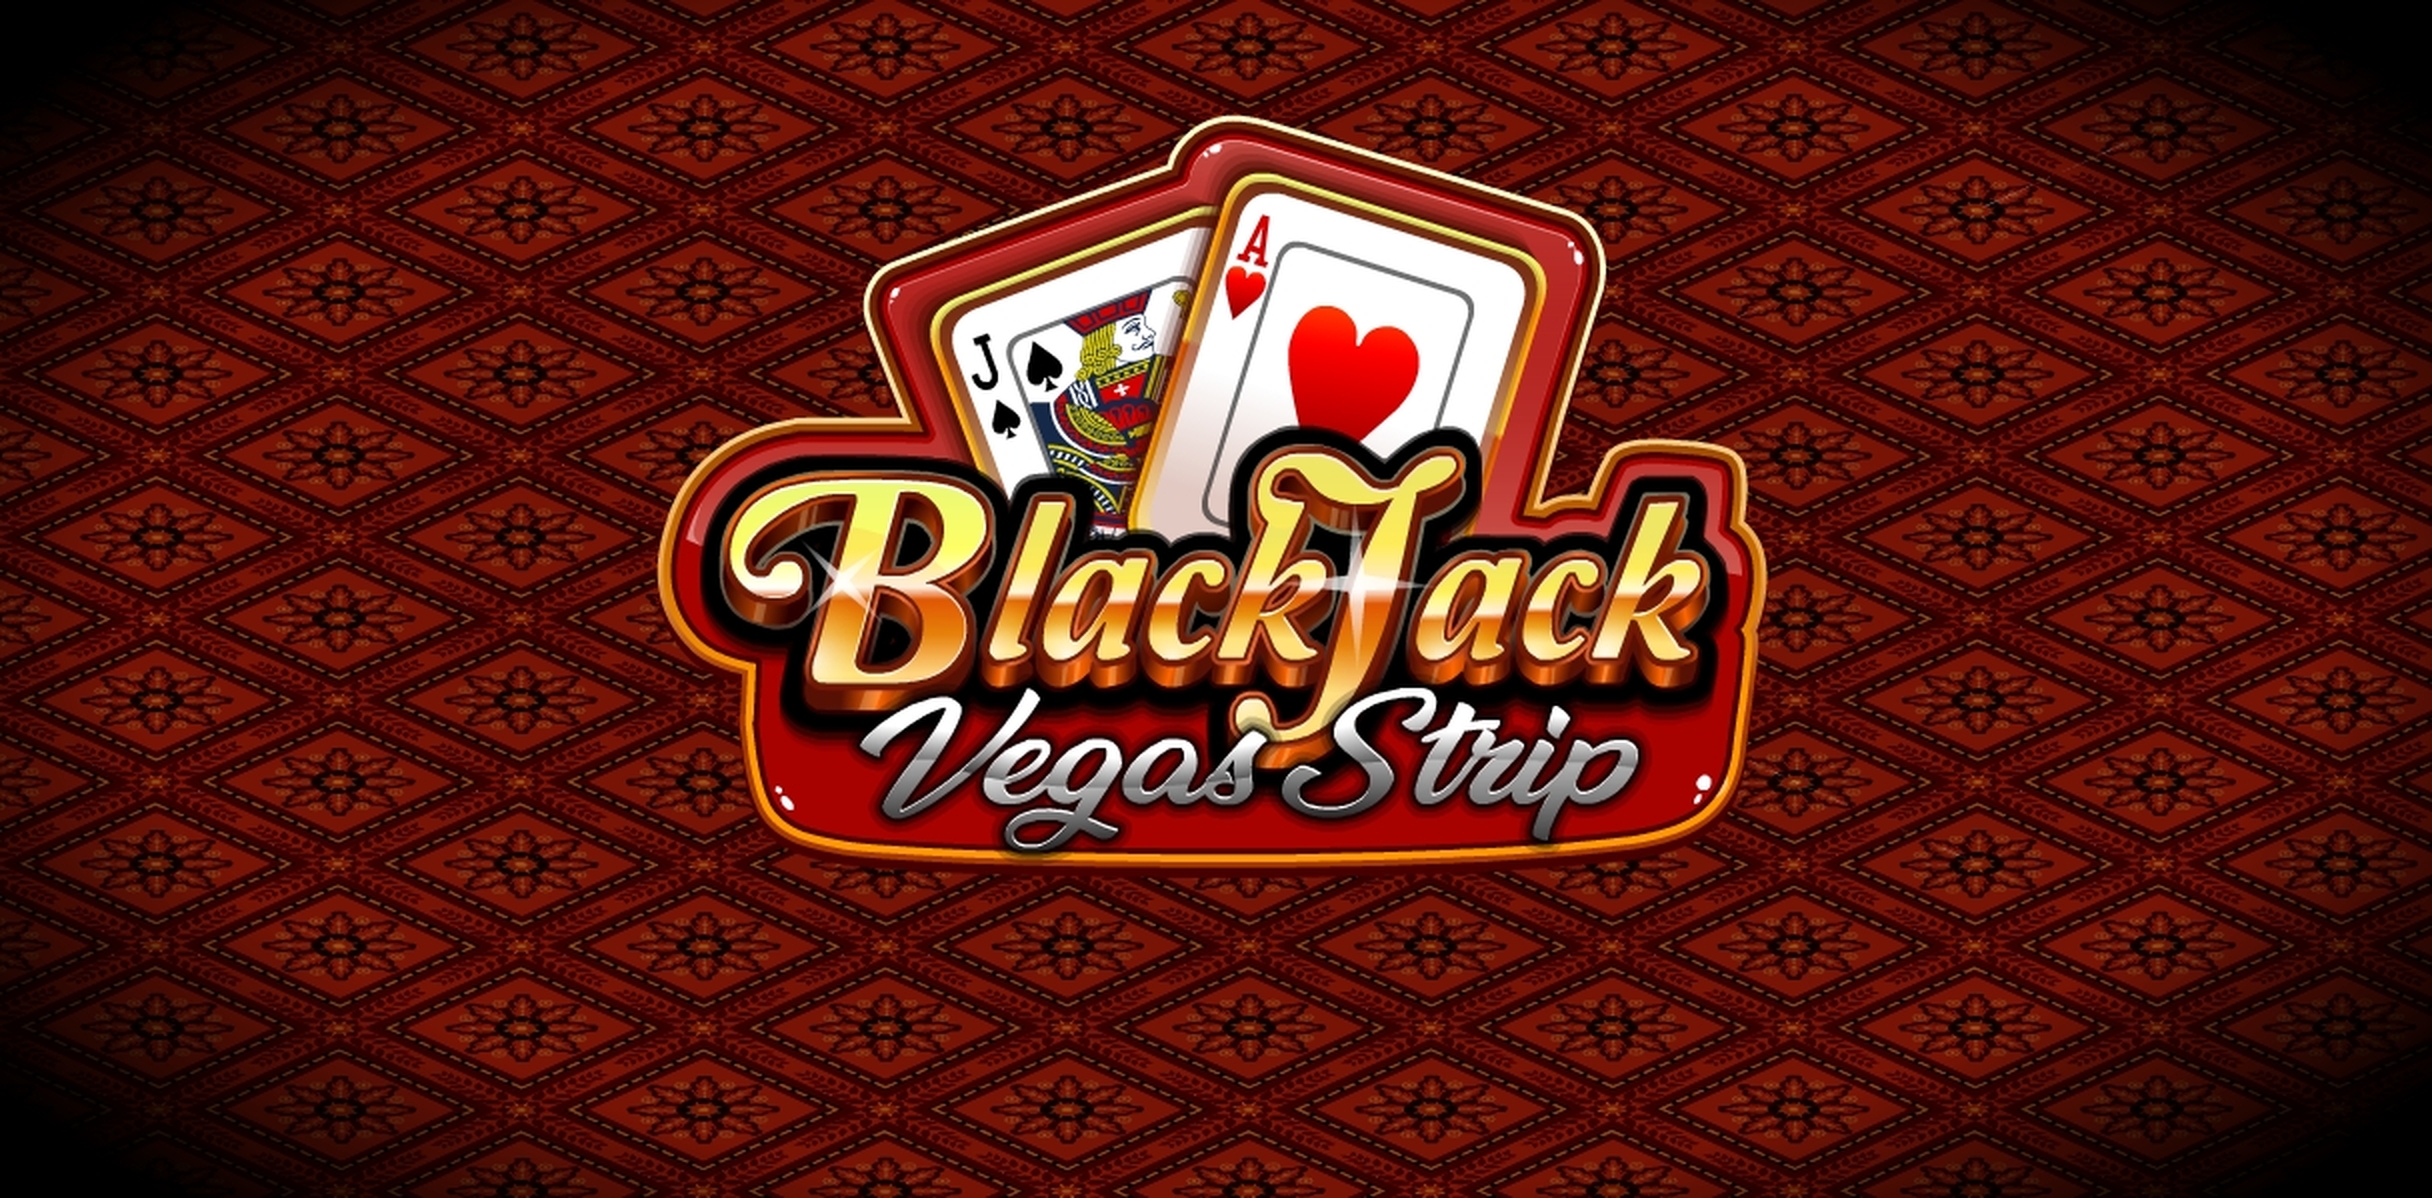 Blackjack Vegas Strip demo